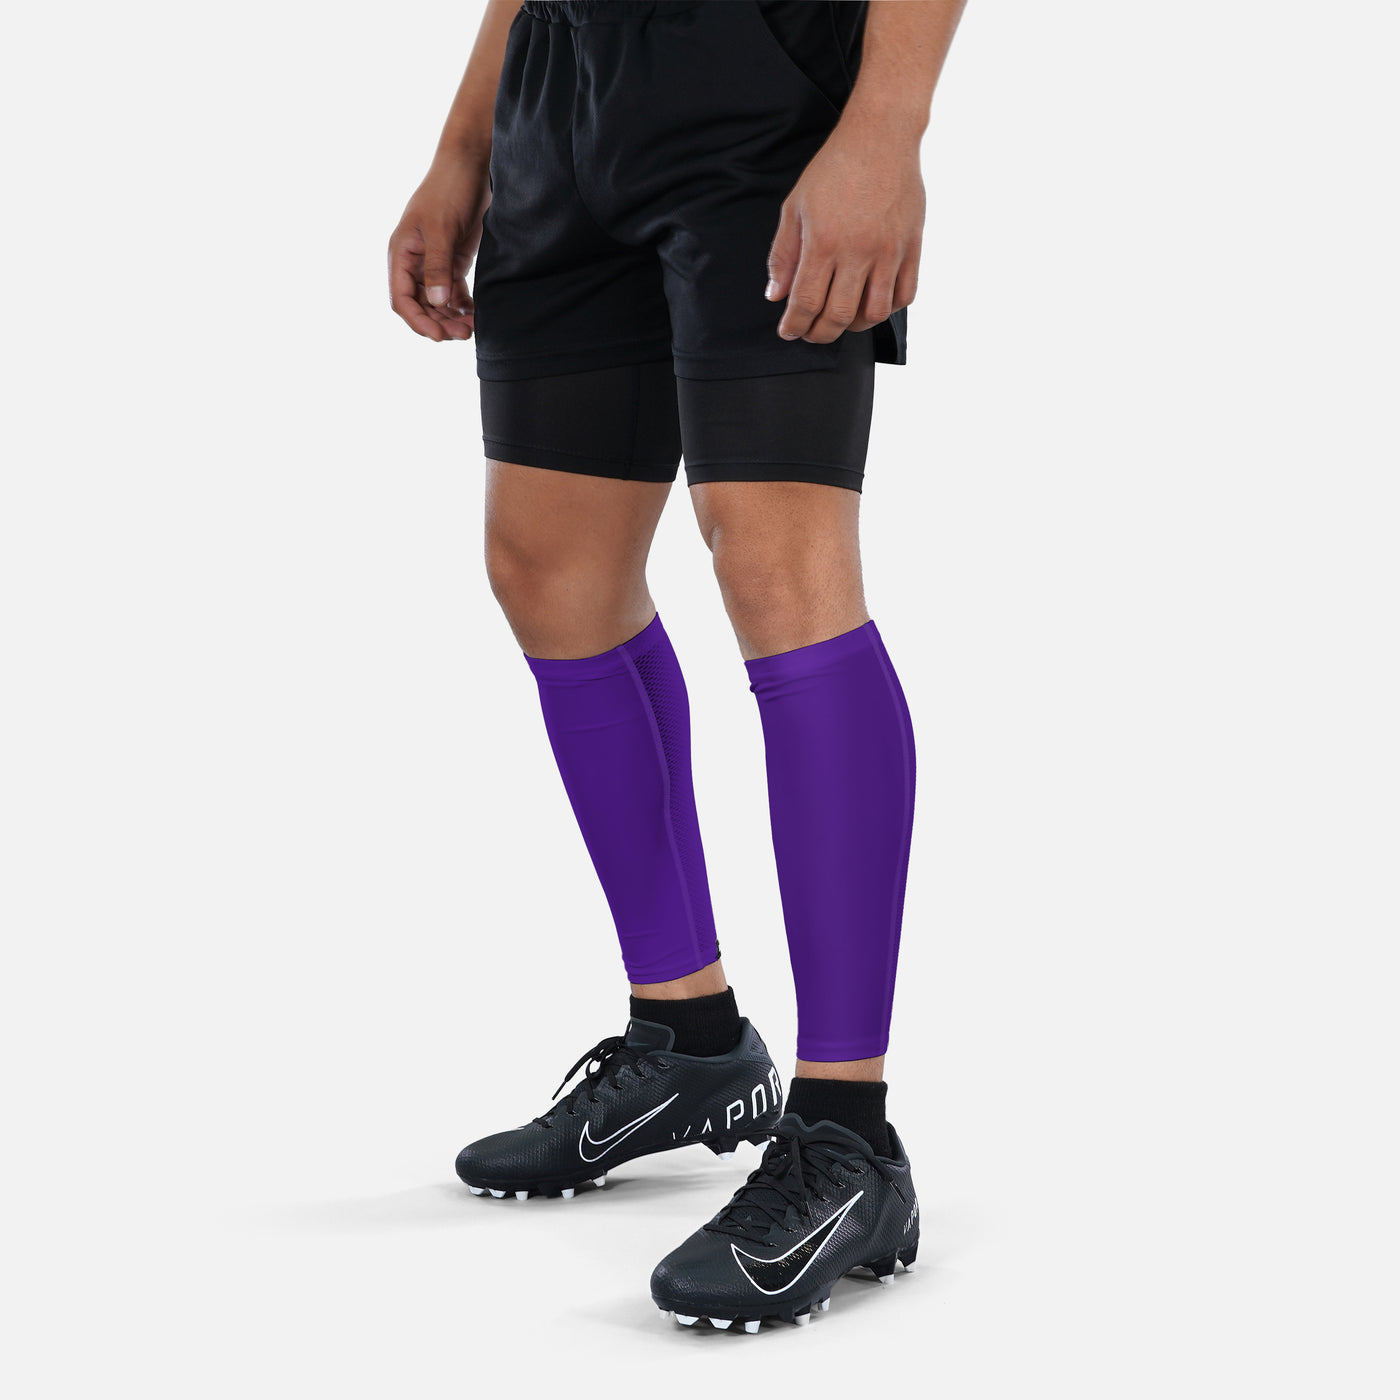 Hue Purple Pro Calf Sleeves